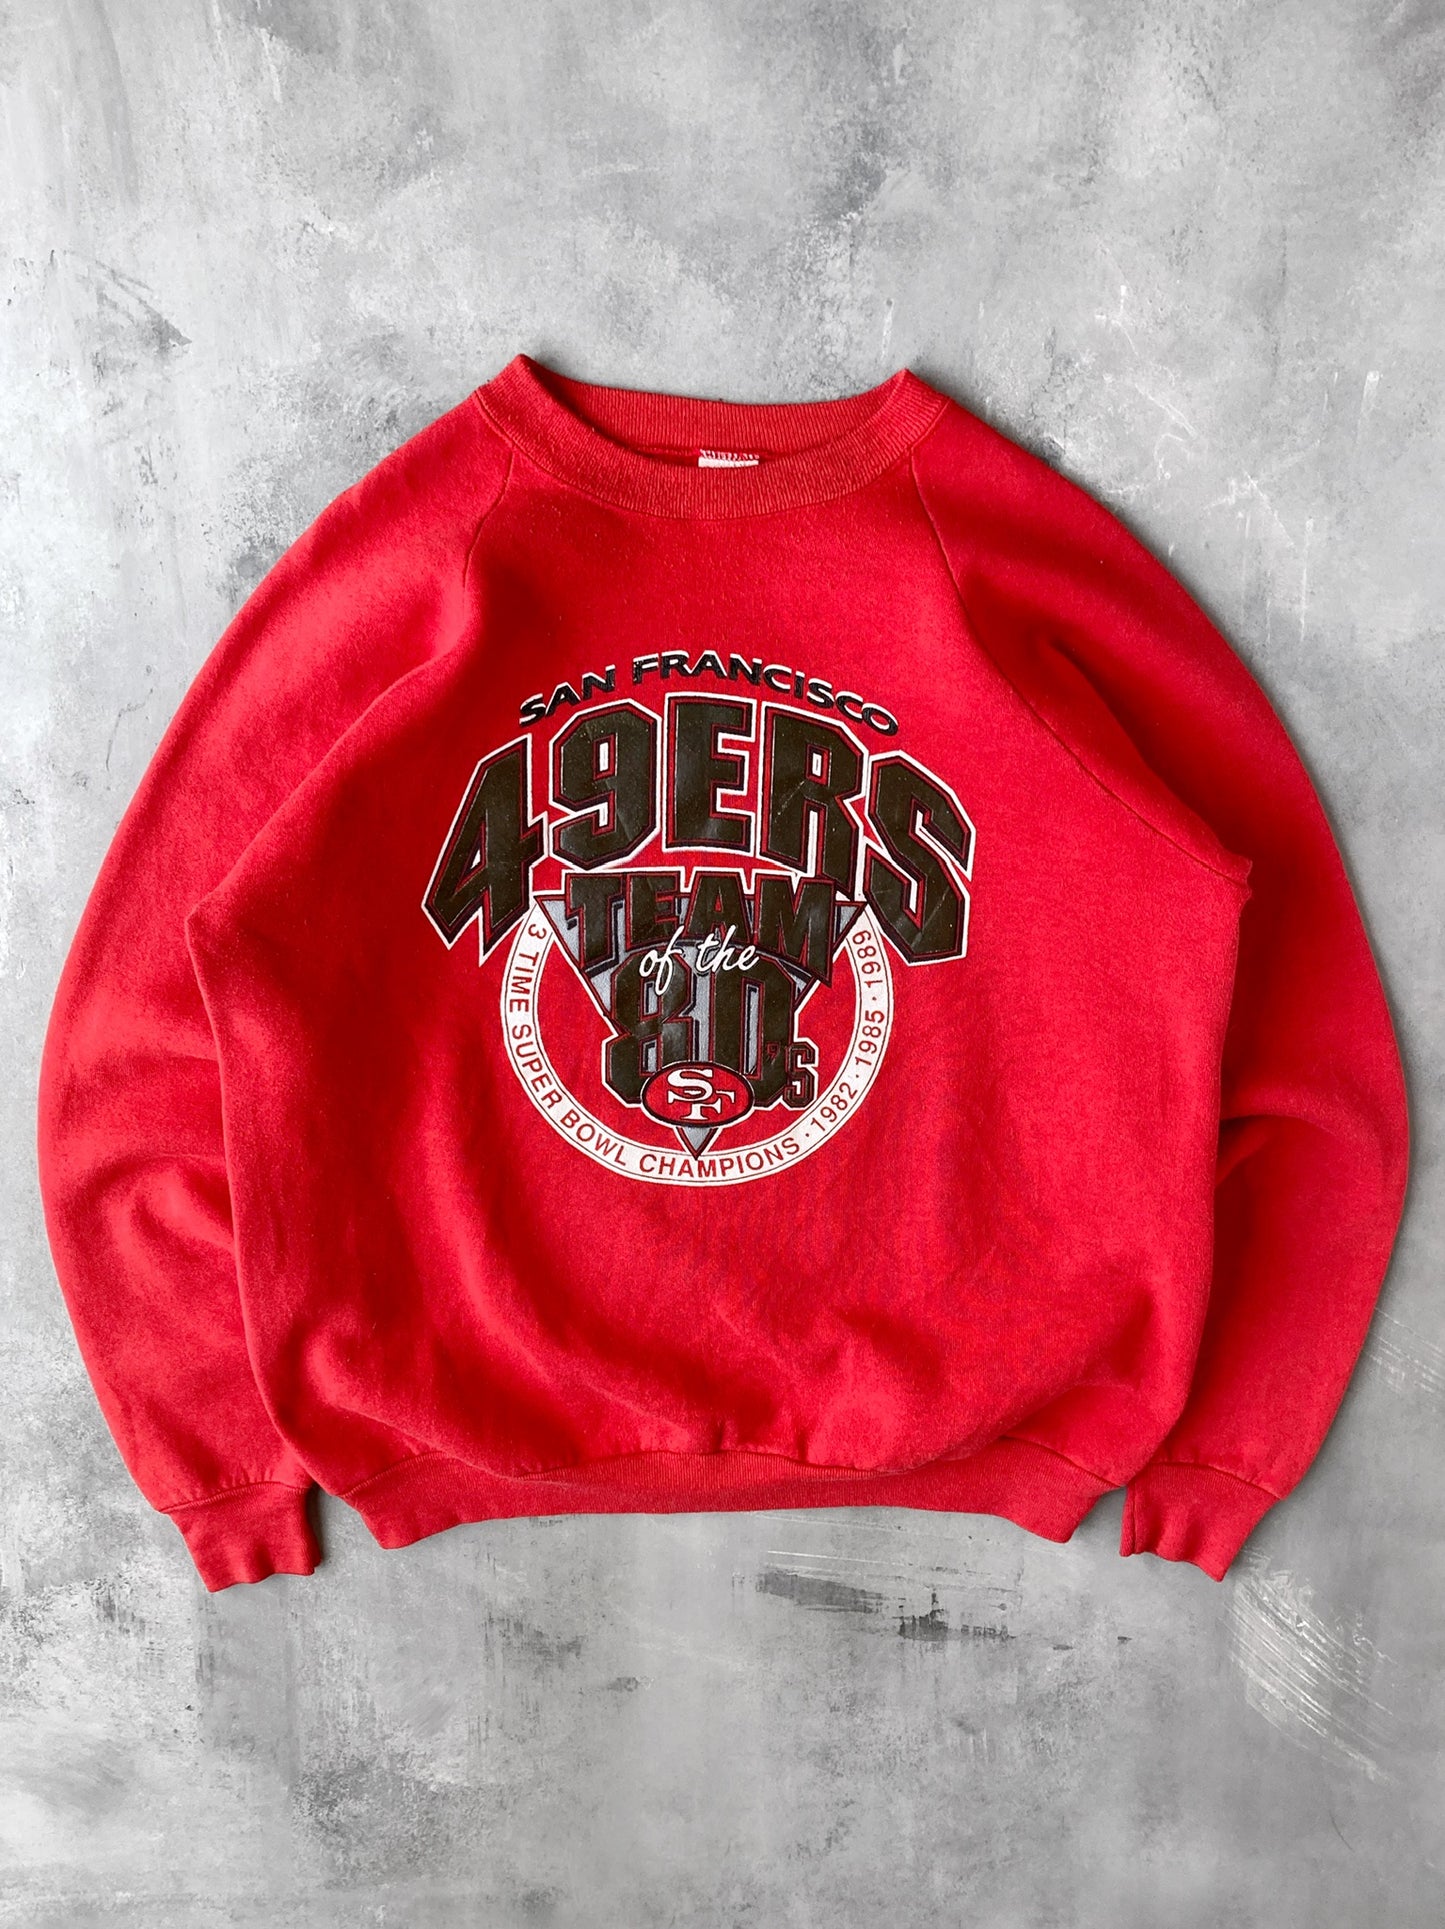 San Francisco 49ers Sweatshirt '89 - Large / XL